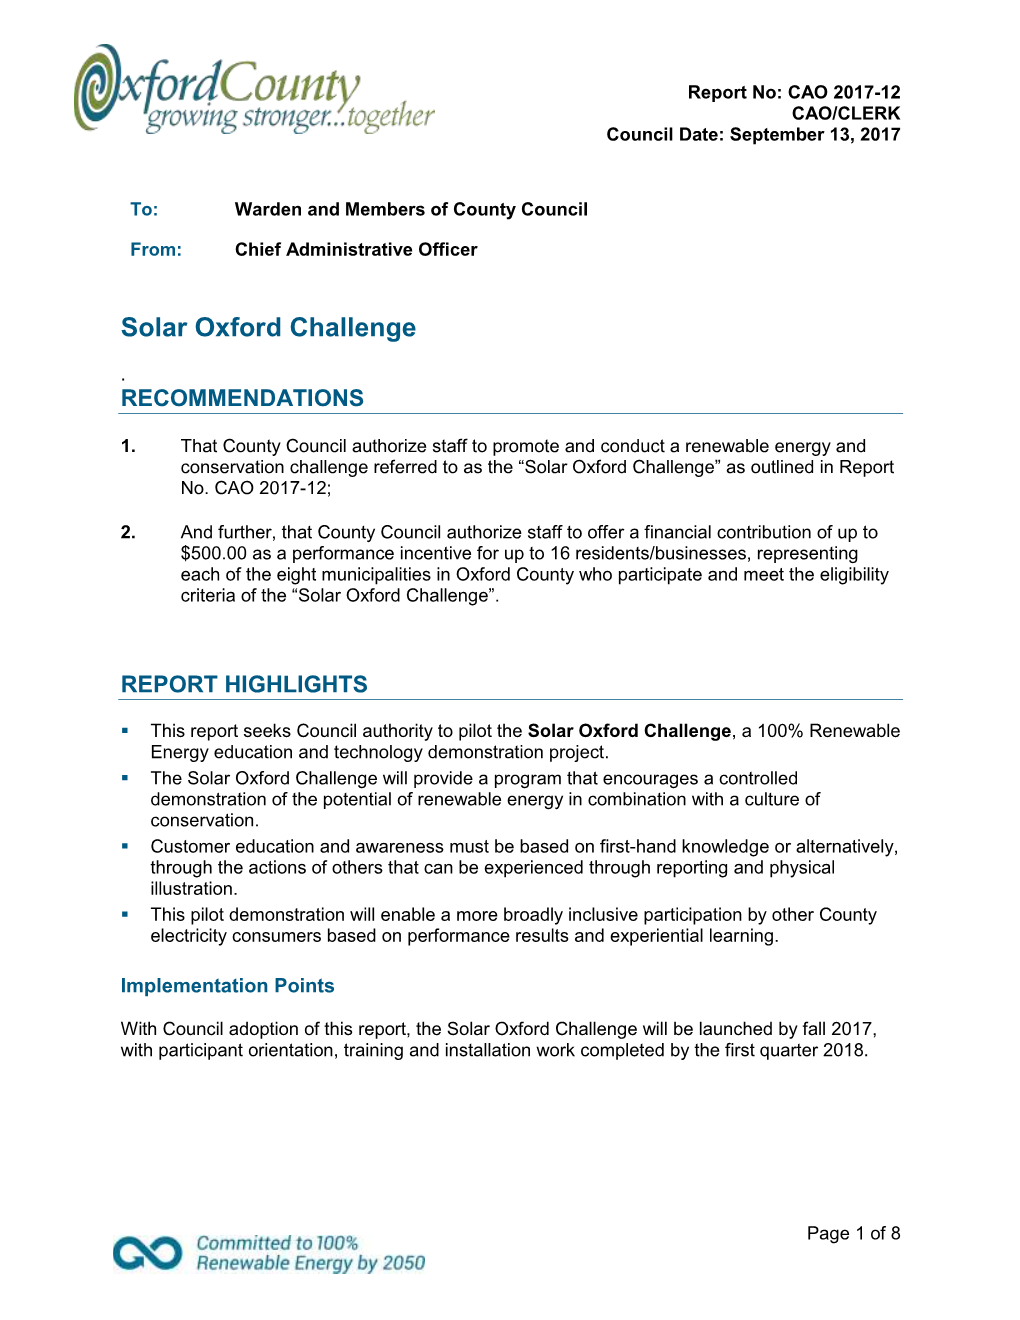 Solar Oxford Challenge